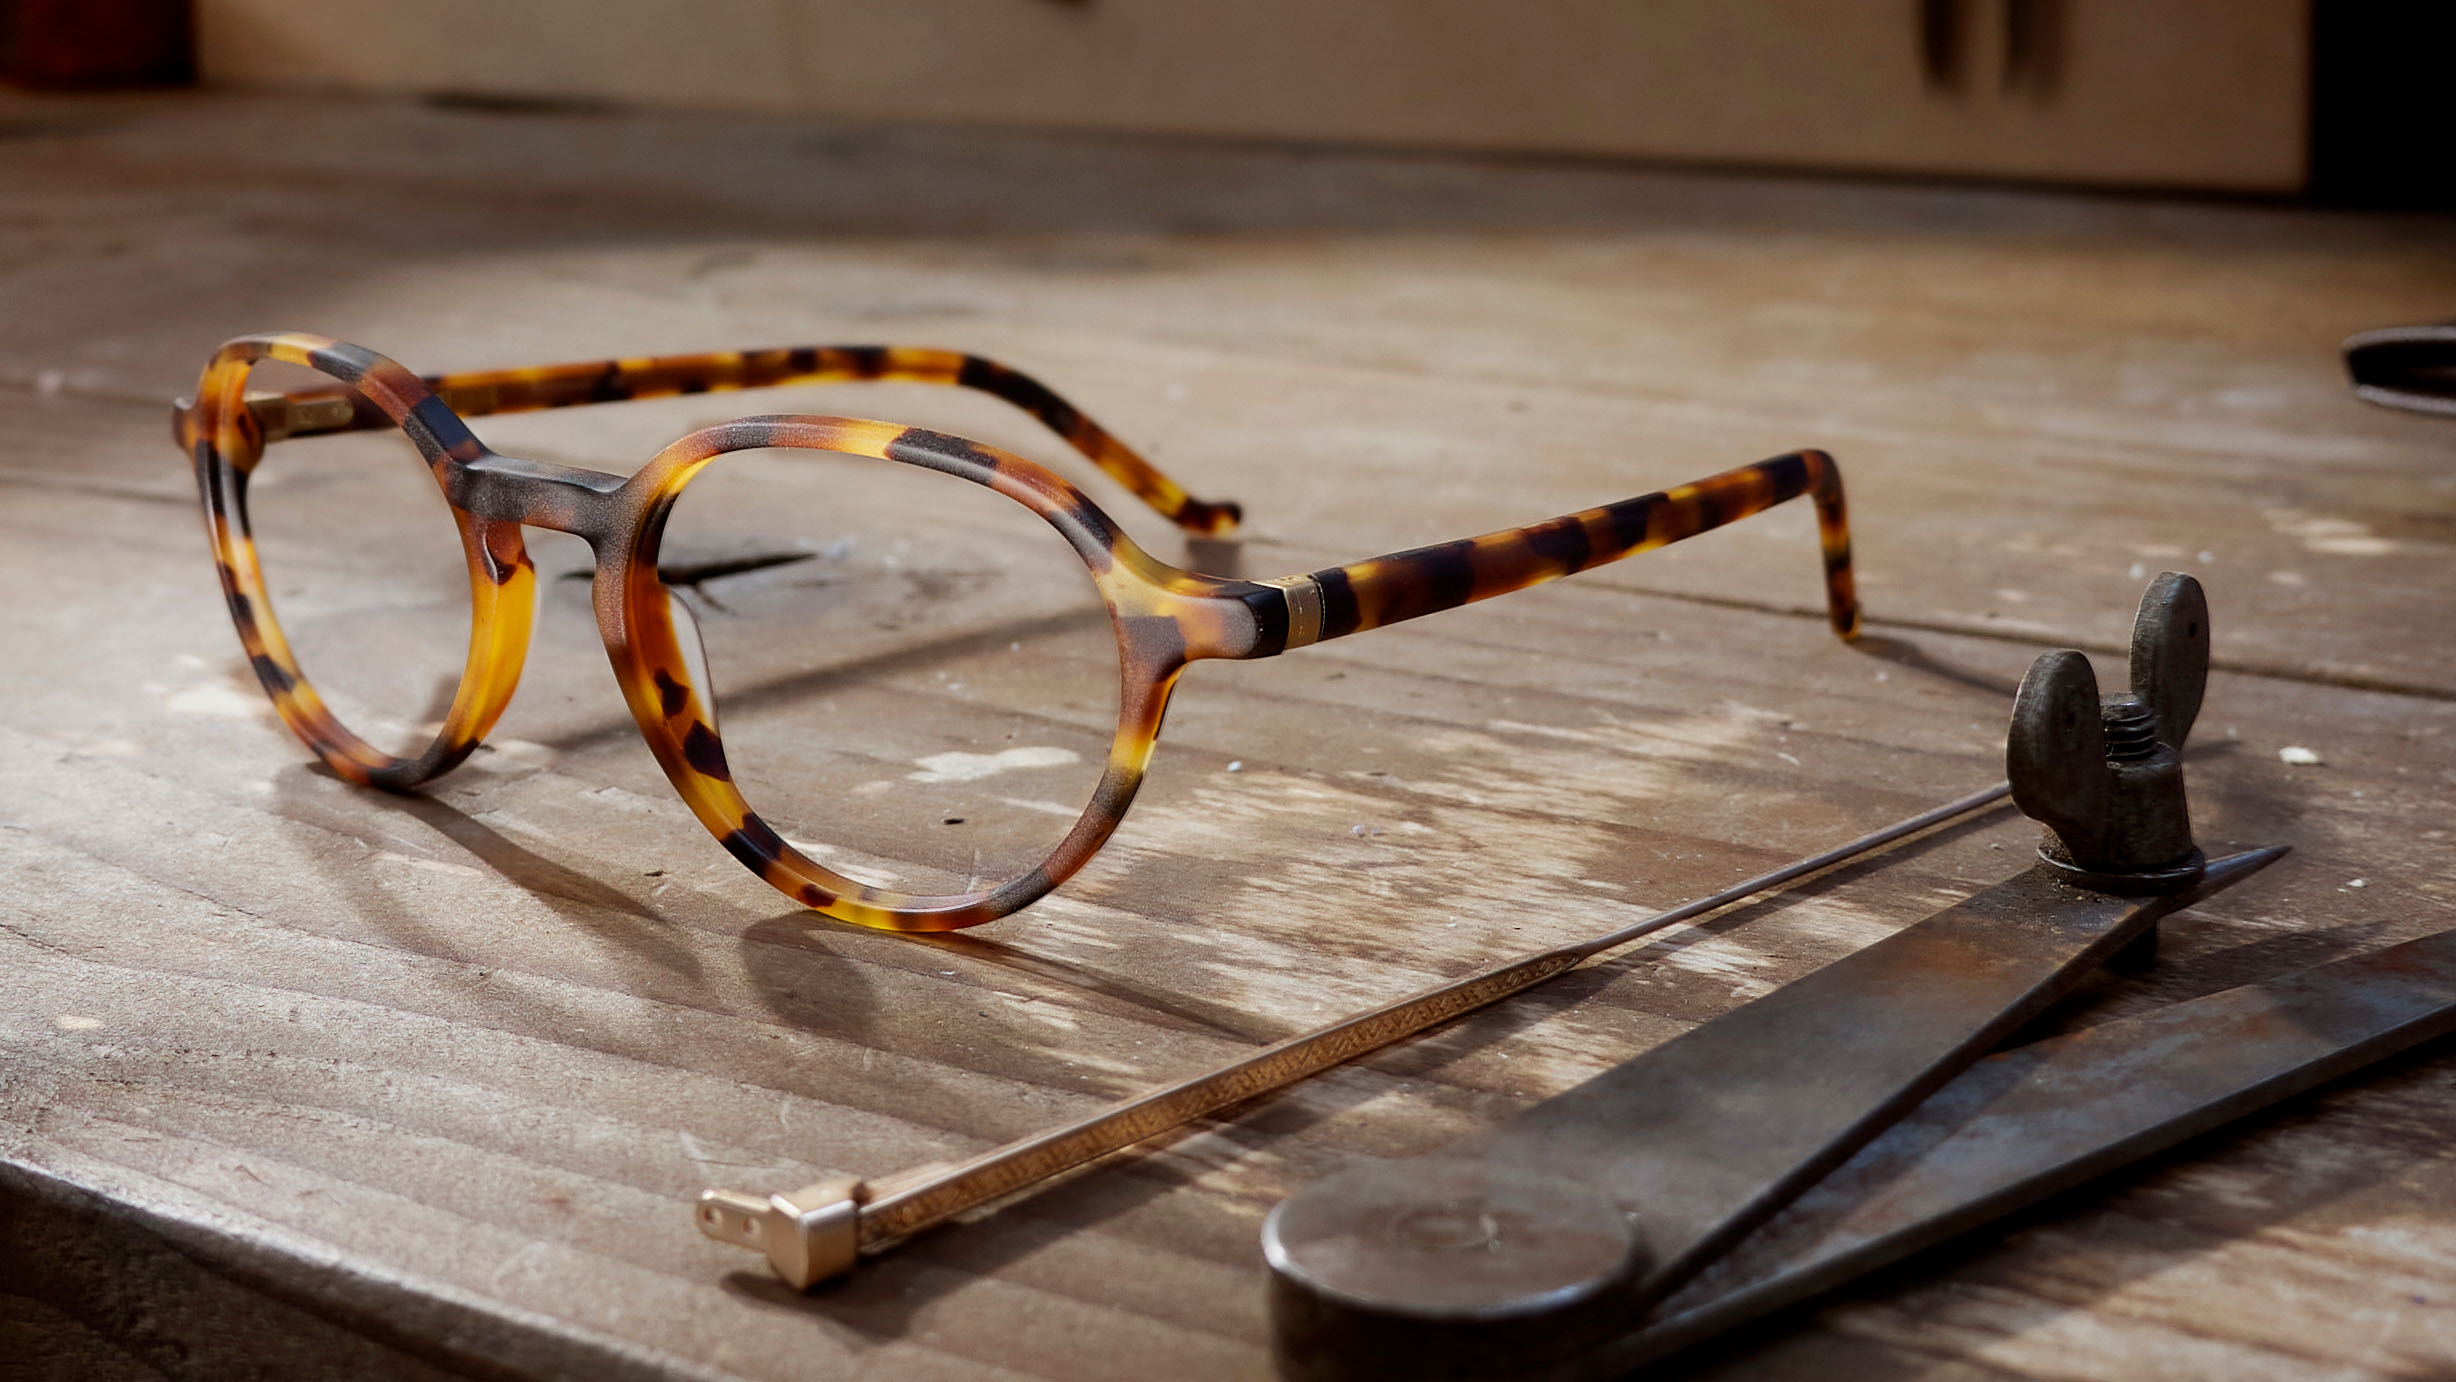 MD1888 craftsman hand make glasses in Britain